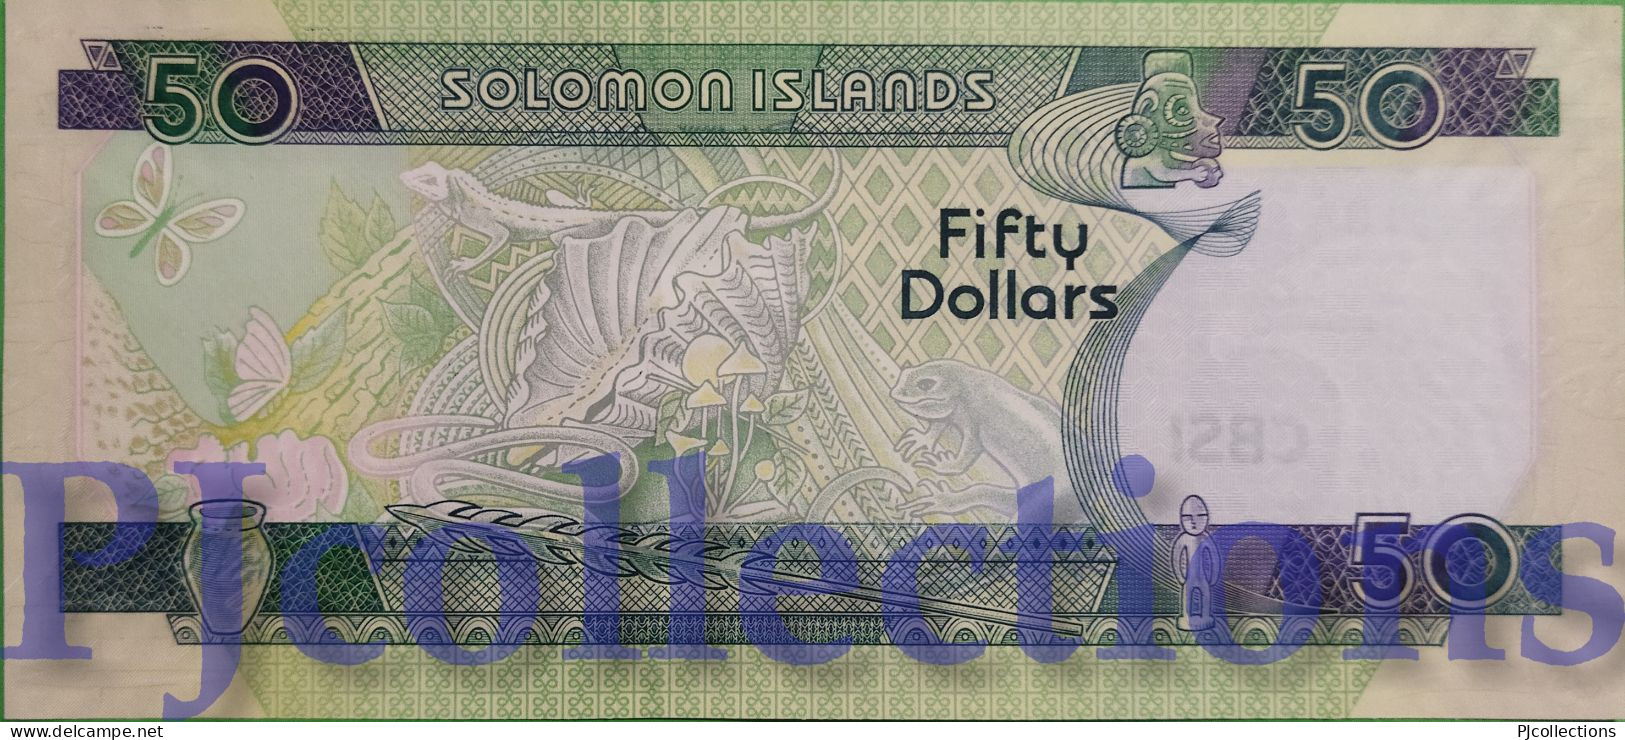 SOLOMON ISLANDS 50 DOLLARS 2004 PICK 29 UNC LOW SERIAL NUMBER "A/1 001038" - Solomon Islands